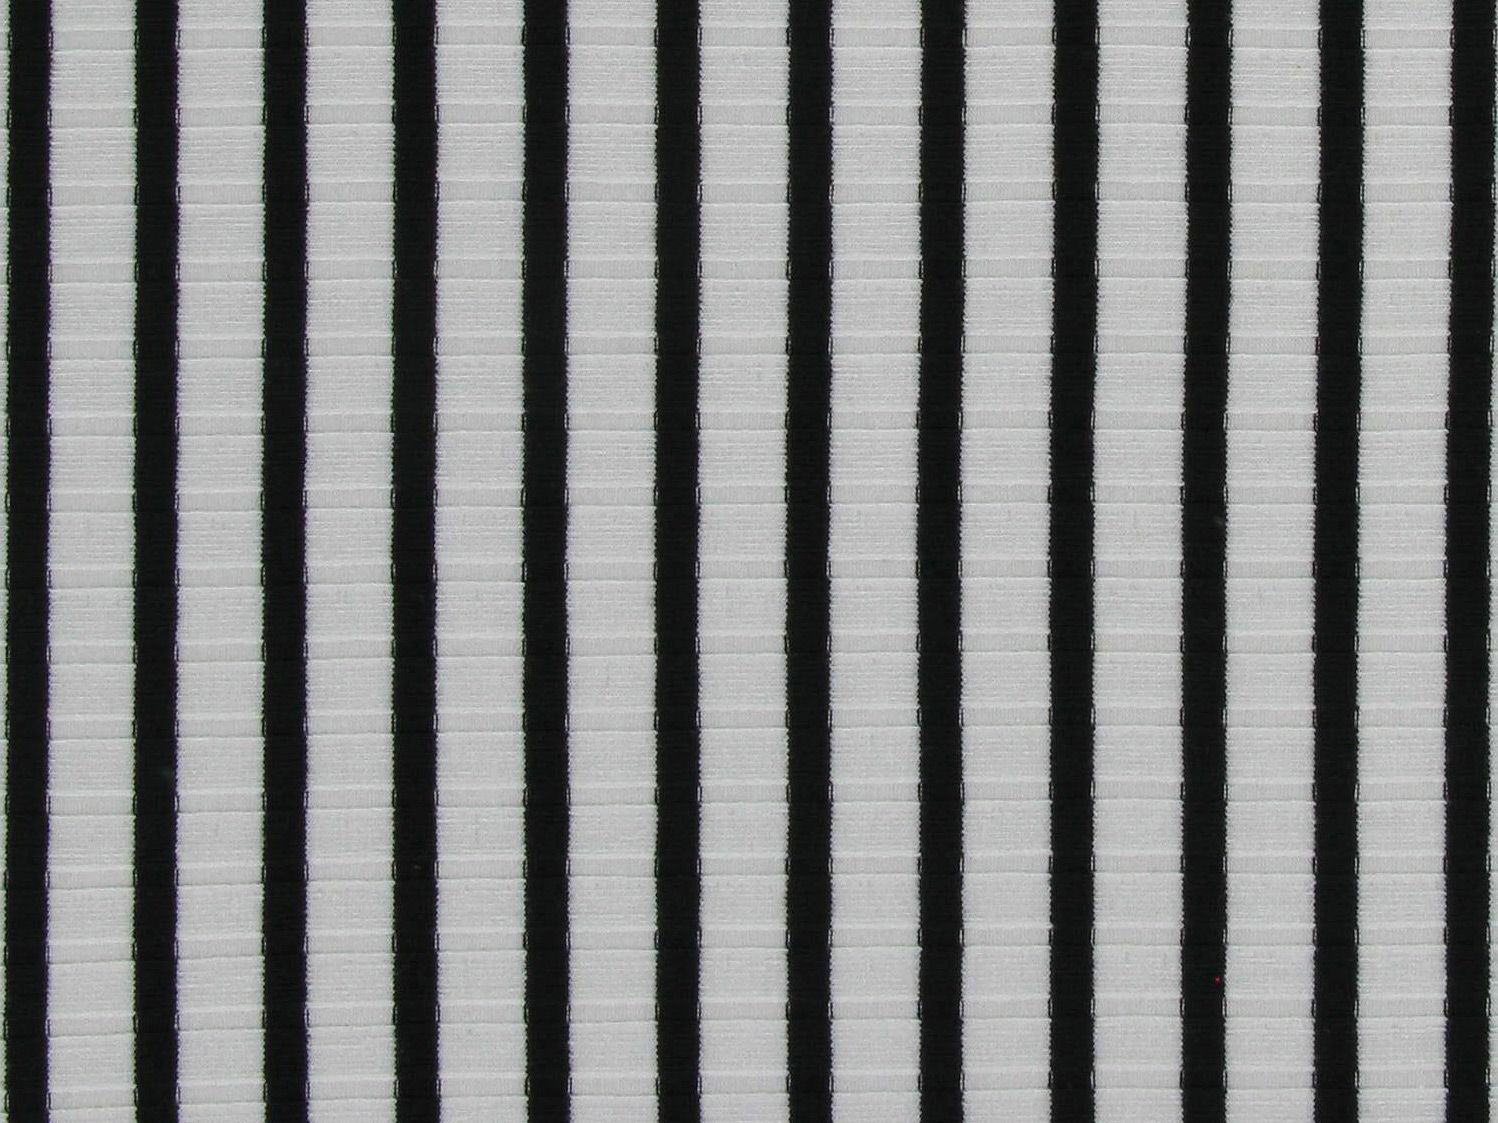 https://www.dalstonmillfabrics.co.uk/pub/media/catalog/product/cache/1313879062af4fe4b91d2ab2cd3e697f/s/t/stripe-ribbed-jersey-wide-black.jpg